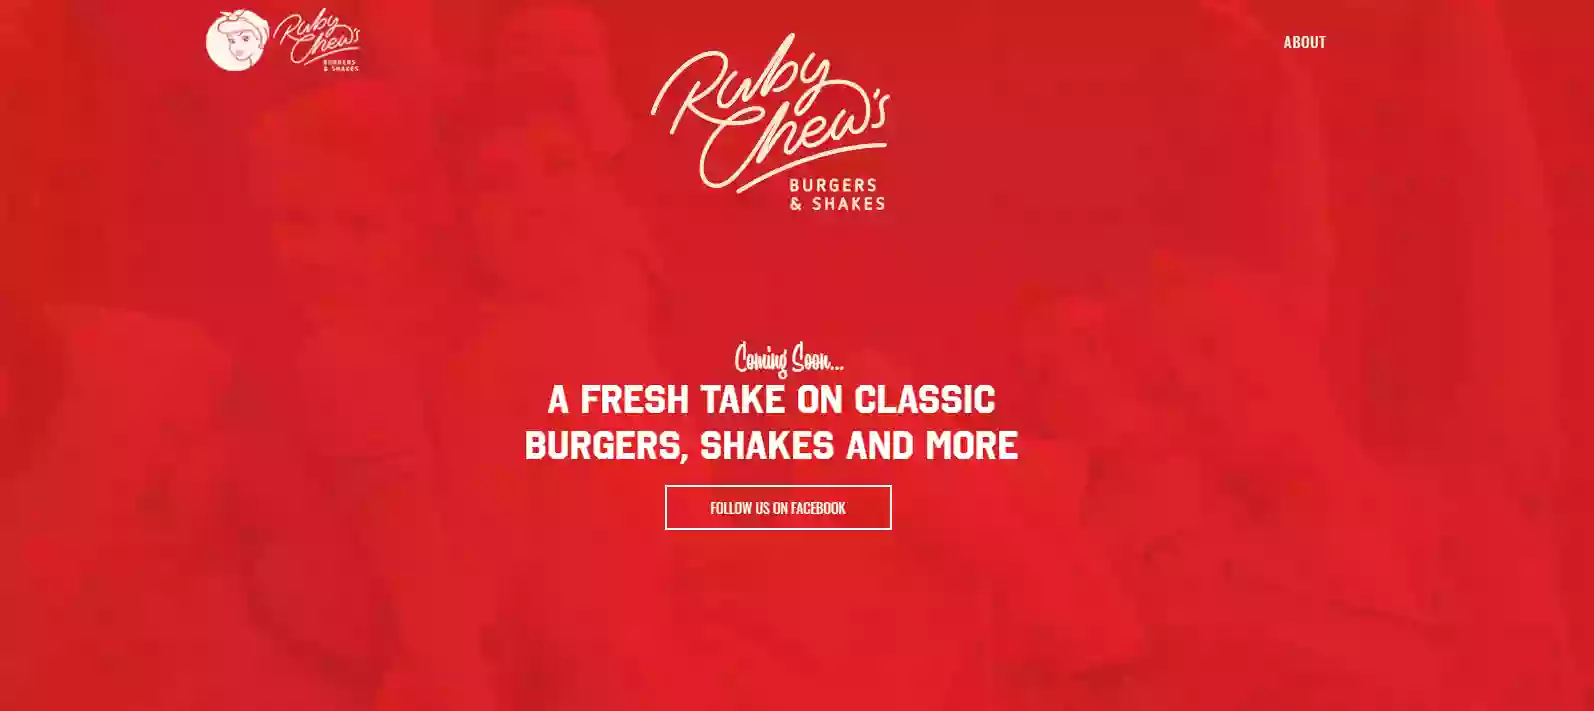 Ruby Chews Burgers & Shakes